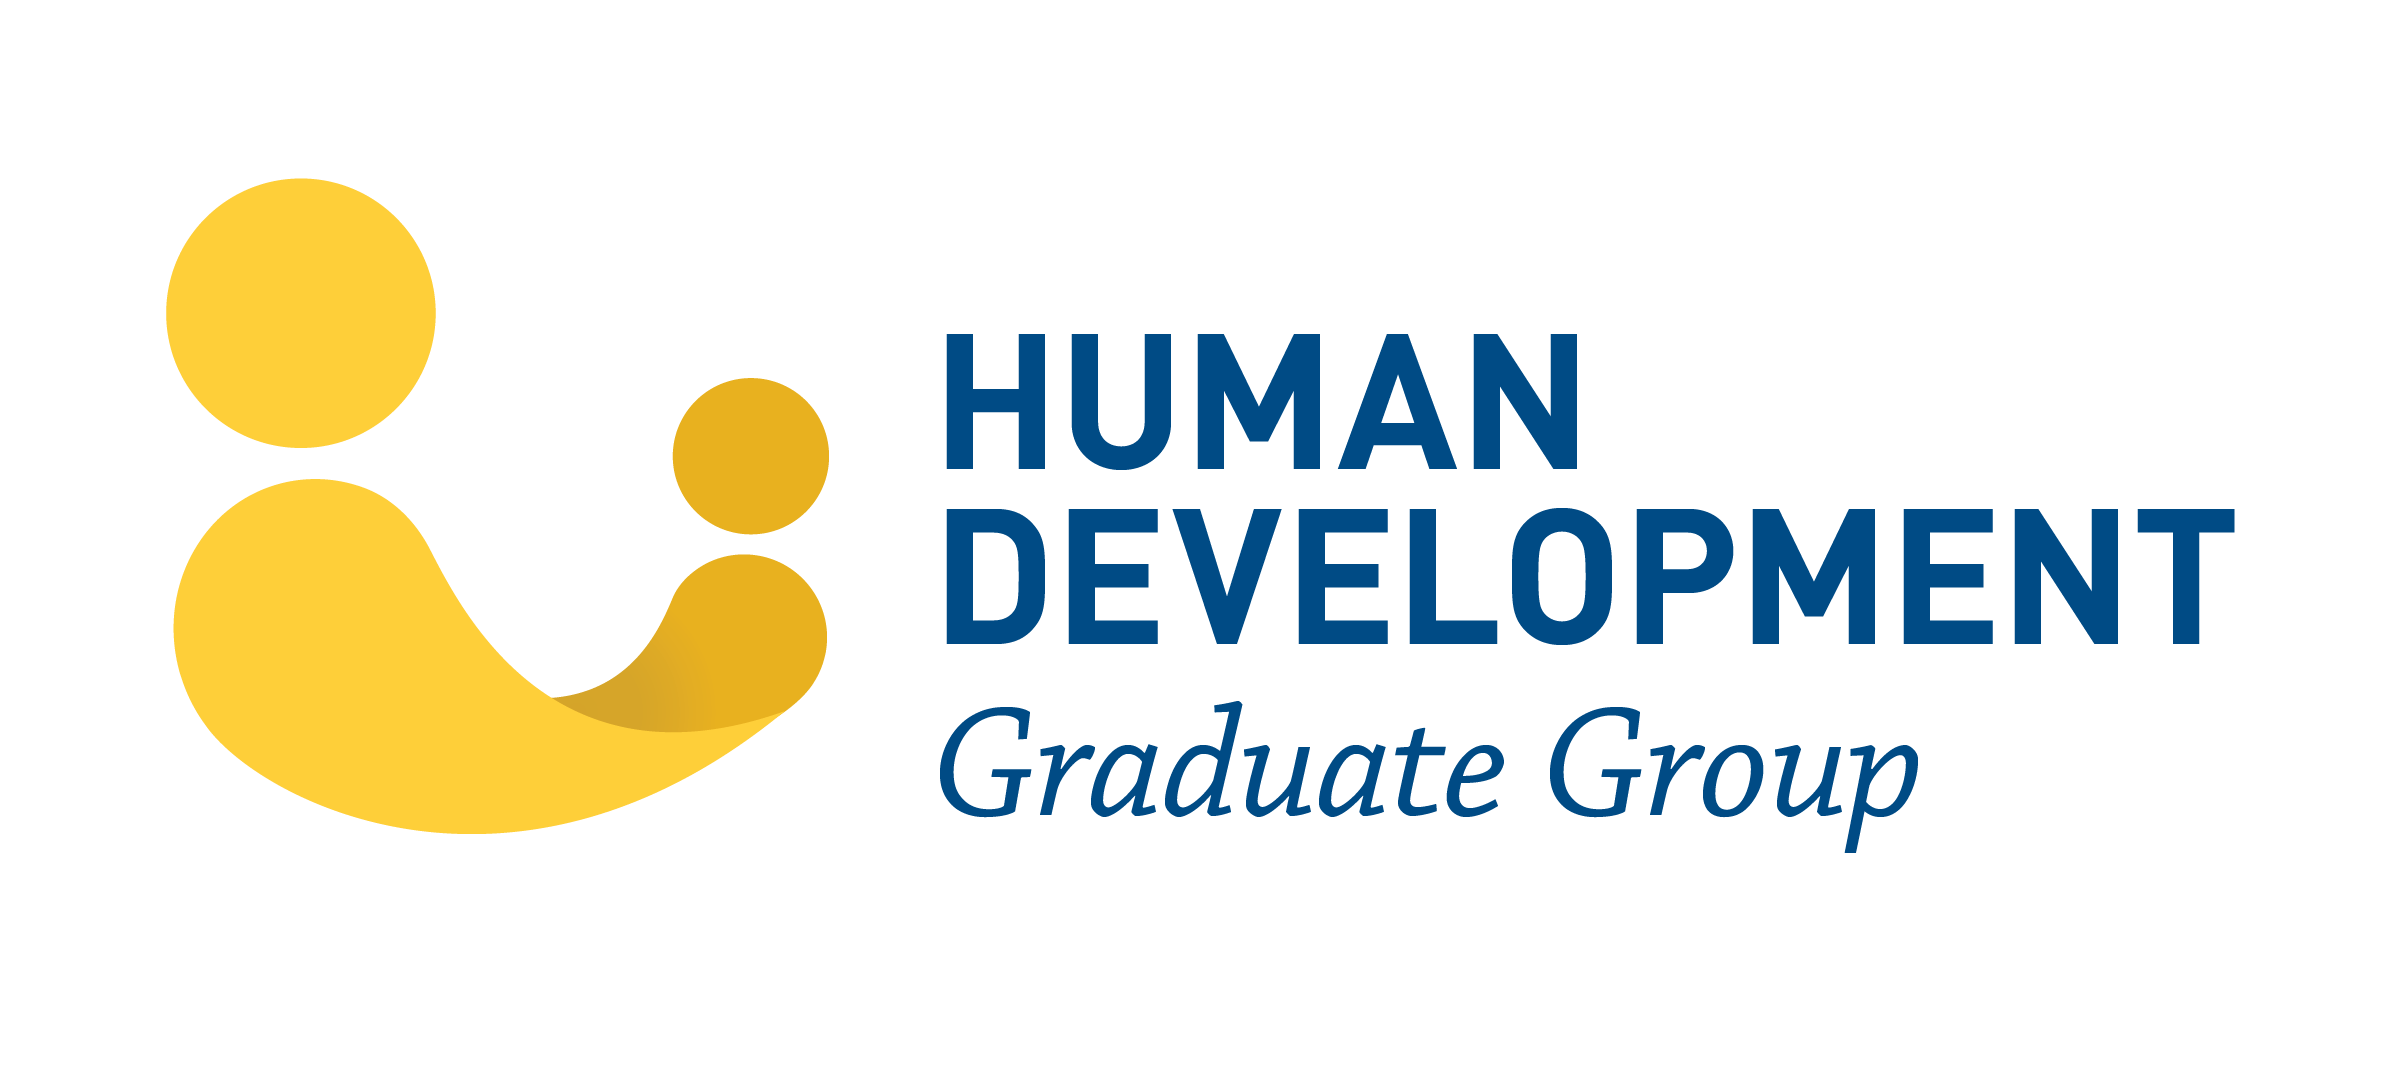 Development Logo - Human Development Graduate Group